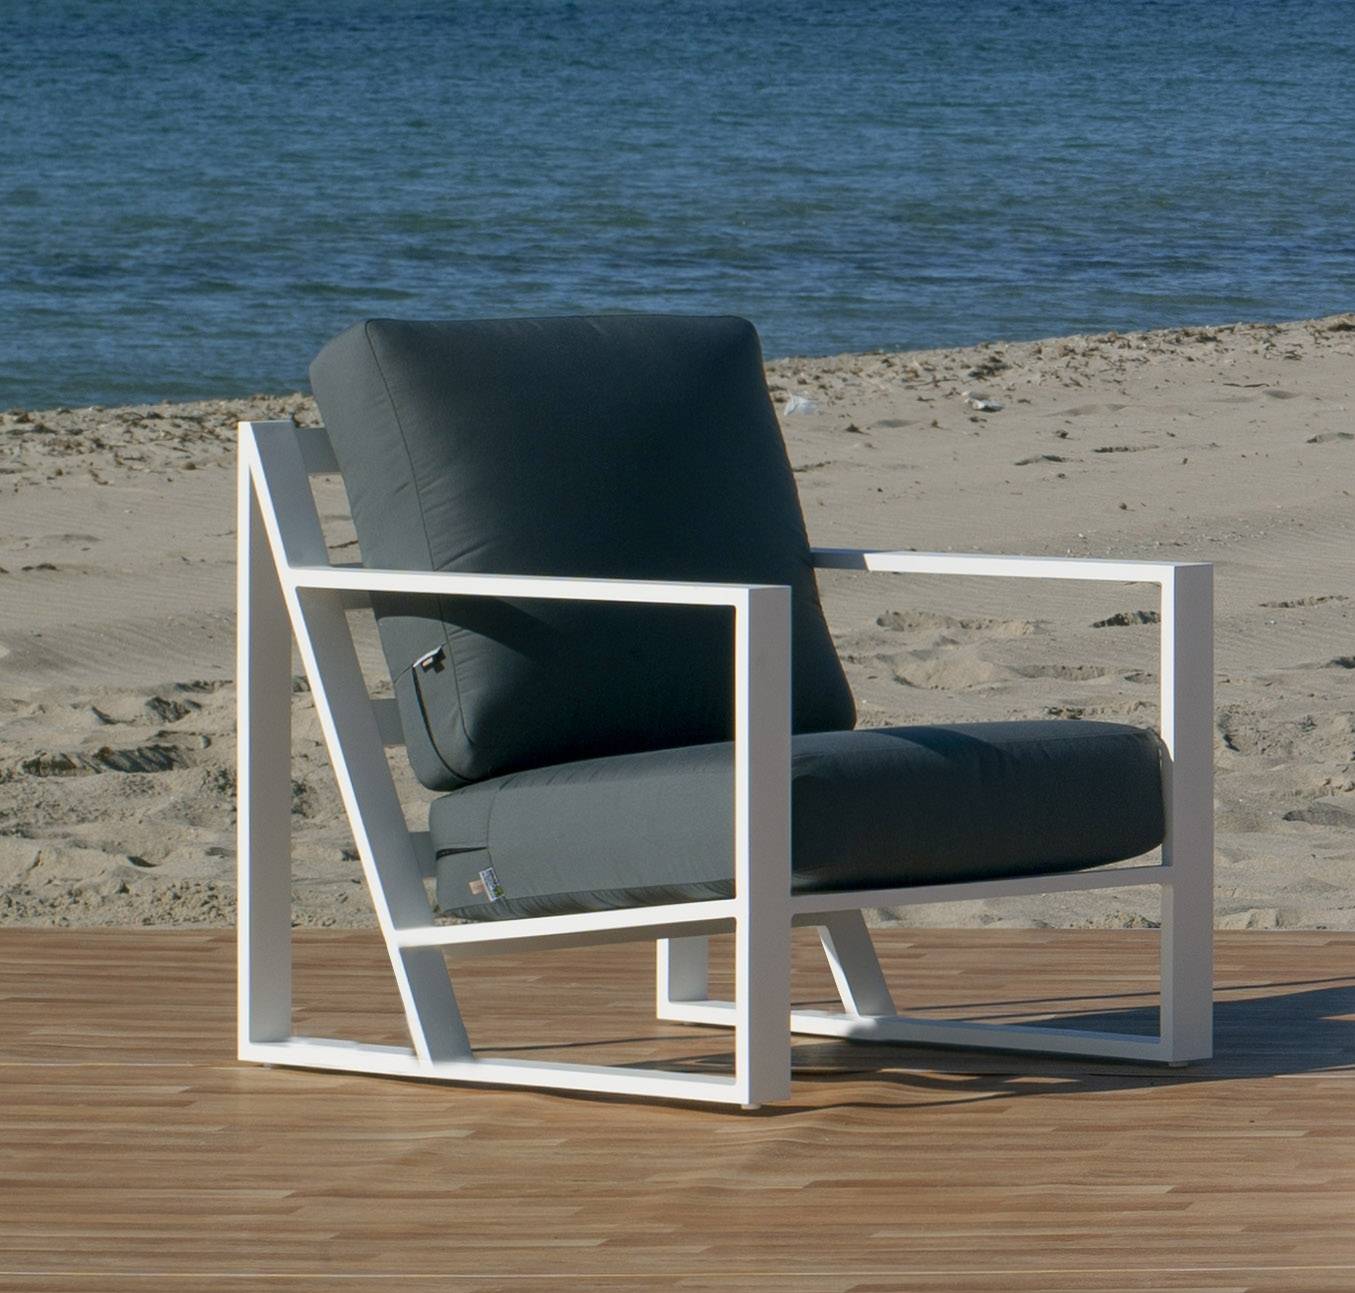 Set Aluminio Luxe Aleli-9 - Lujoso conjunto de aluminio: 1 sofá de 2 plazas + 2 sillones + 2 reposapiés + 1 mesa de centro + cojines.